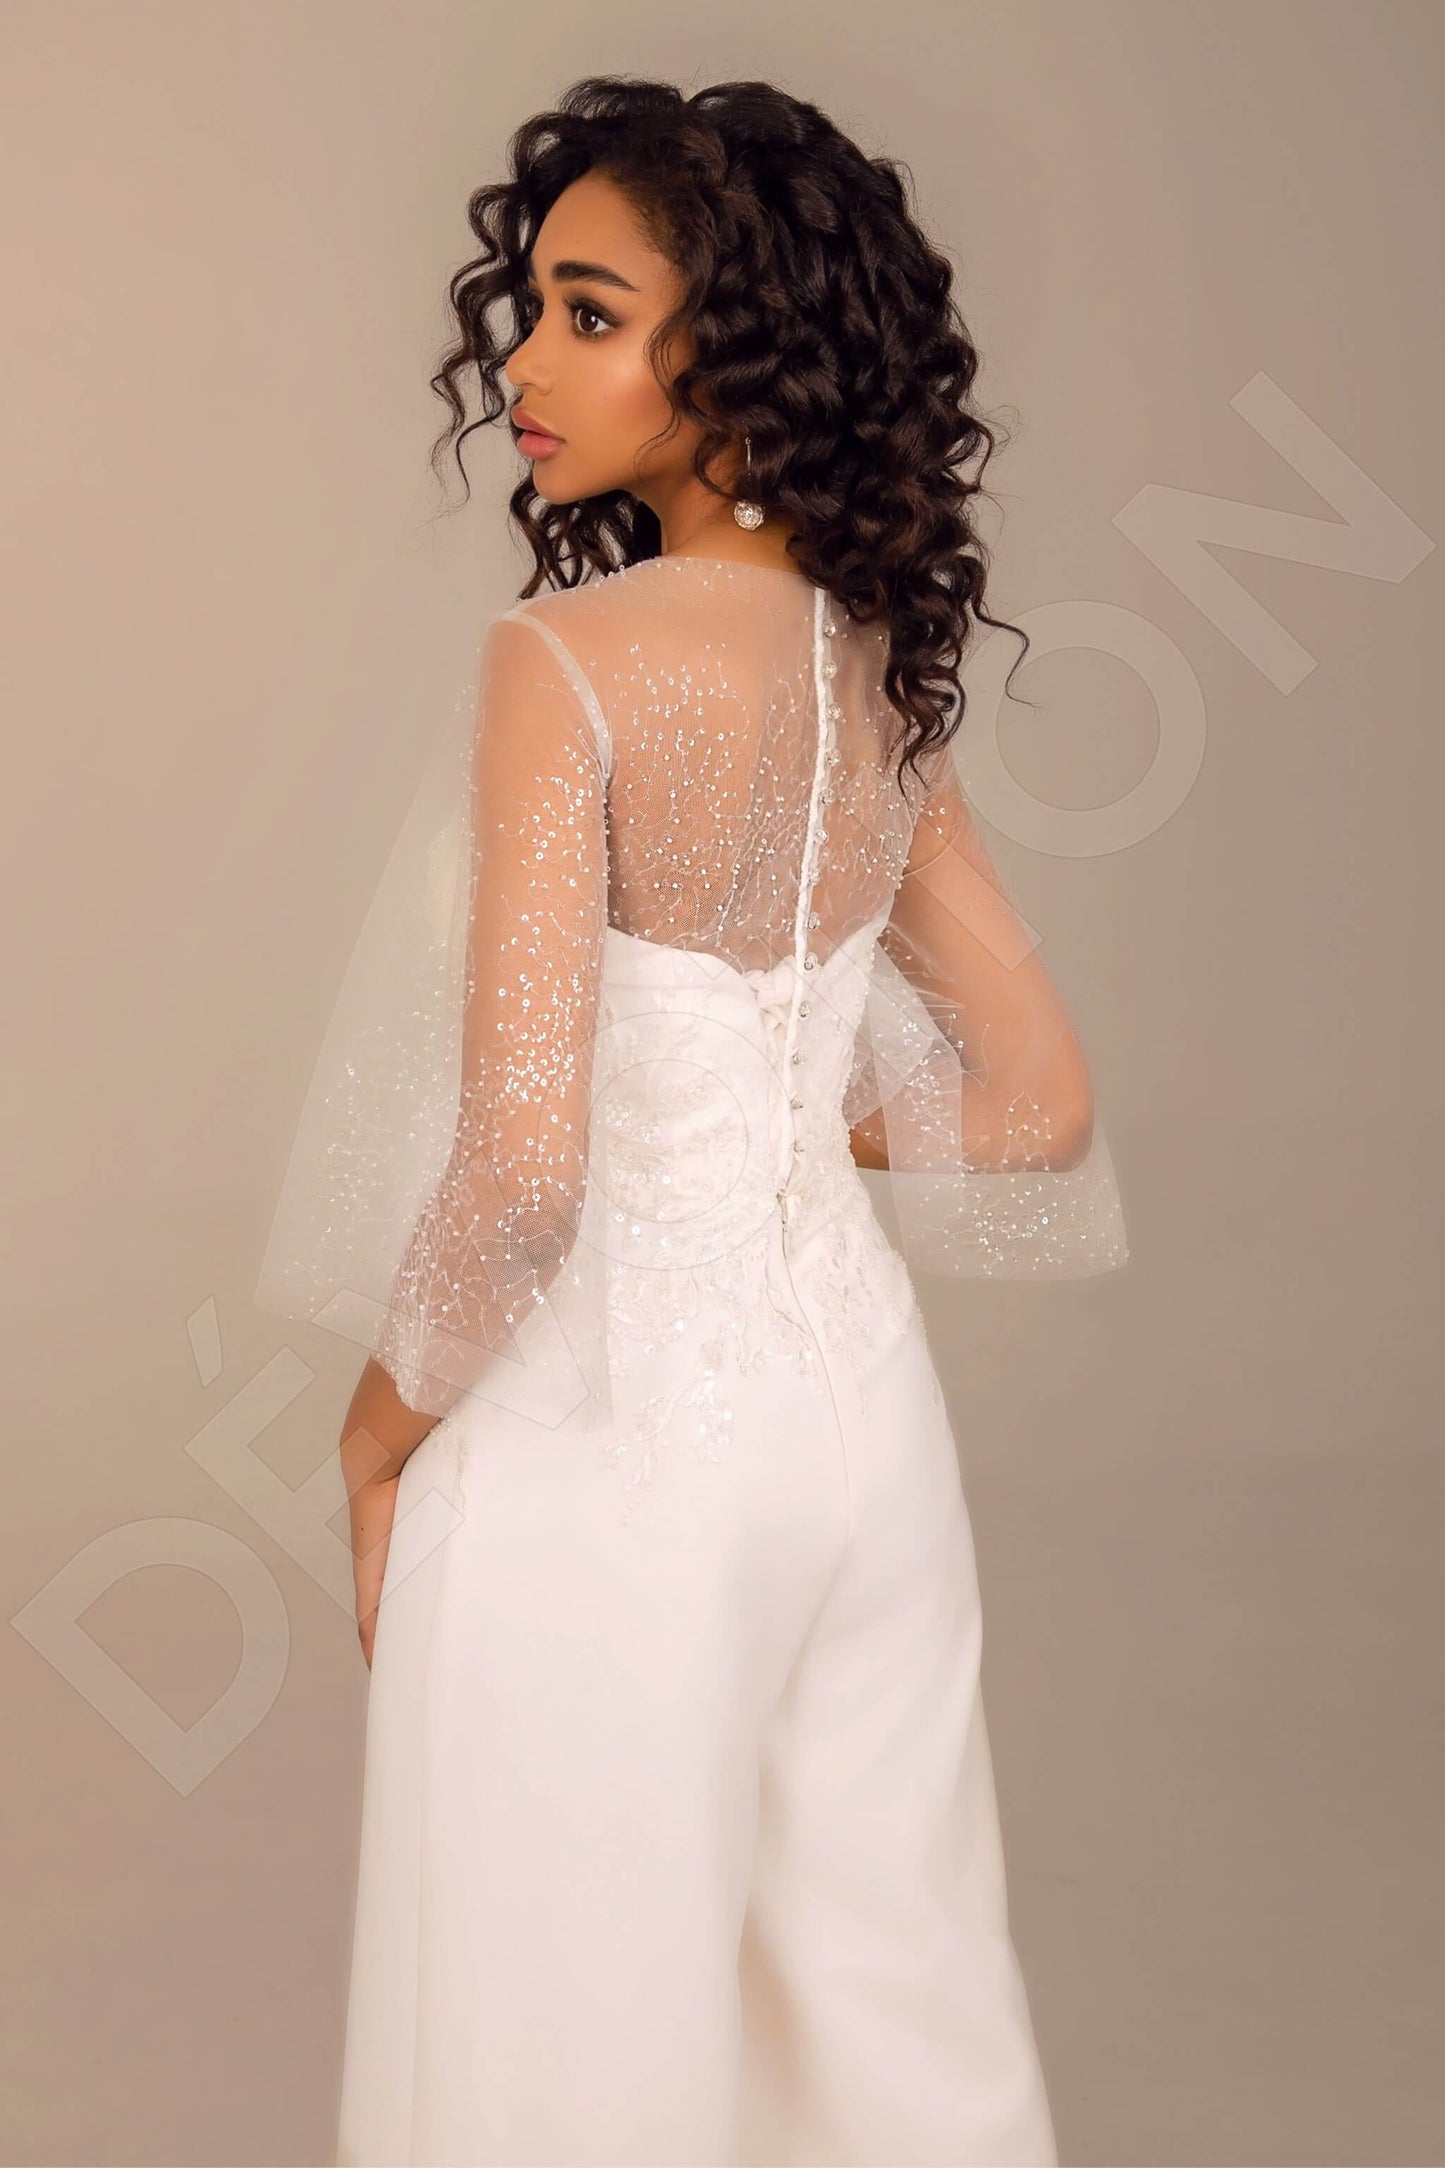 Nailah Full back Pants 3/4 sleeve Wedding Dress Back